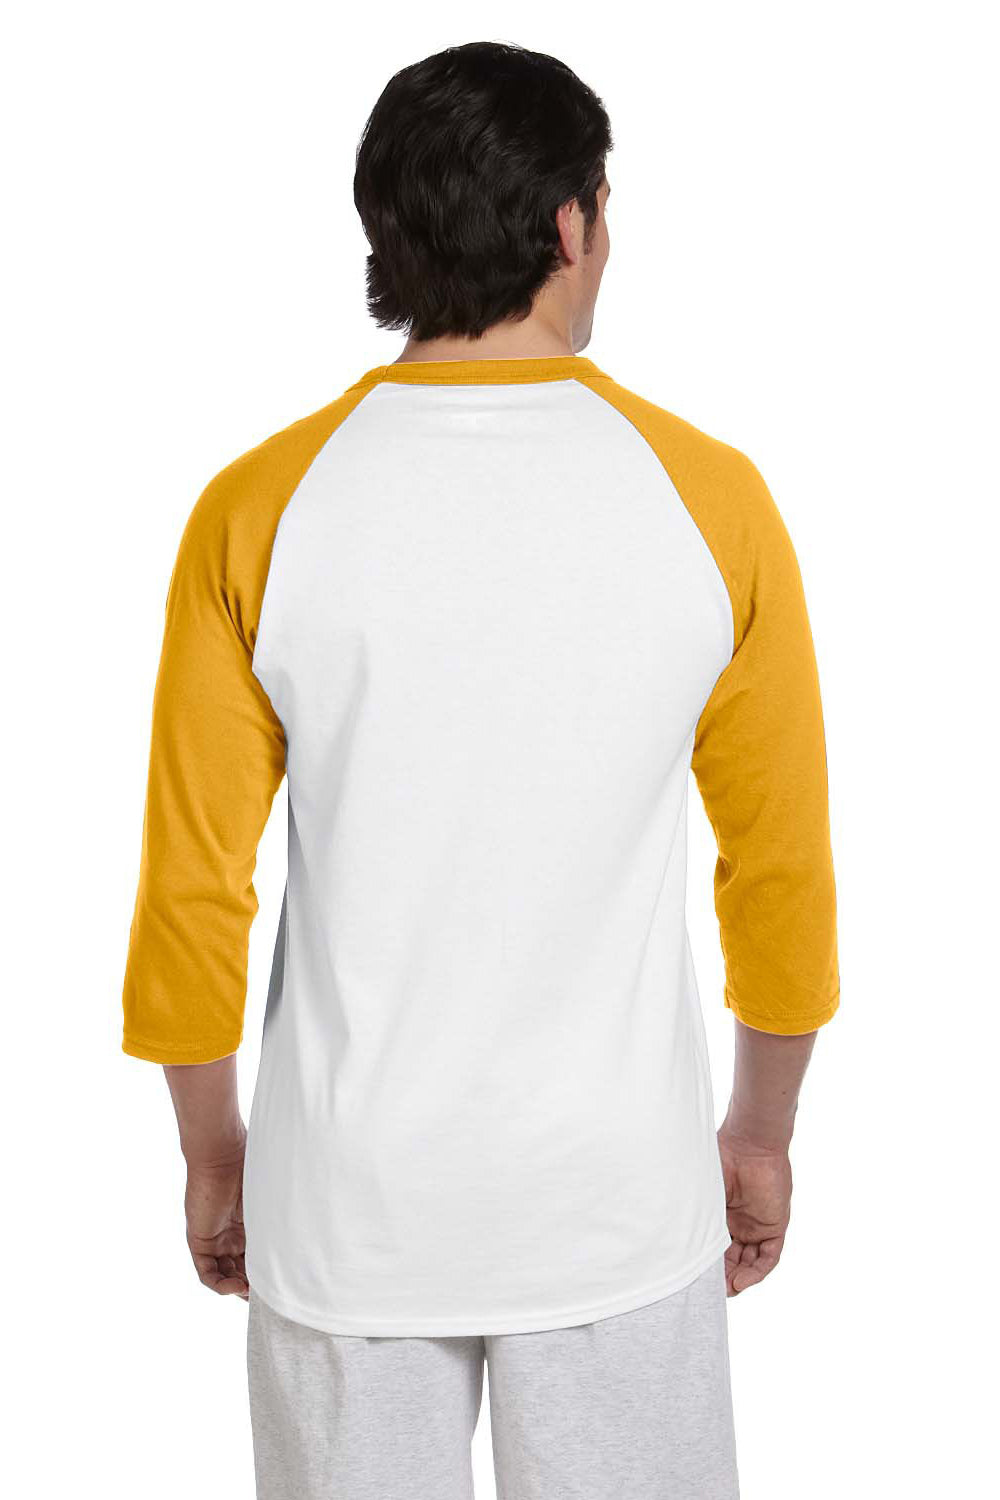 Champion T1397 Mens 3/4 Sleeve Crewneck T-Shirt White/Gold Back